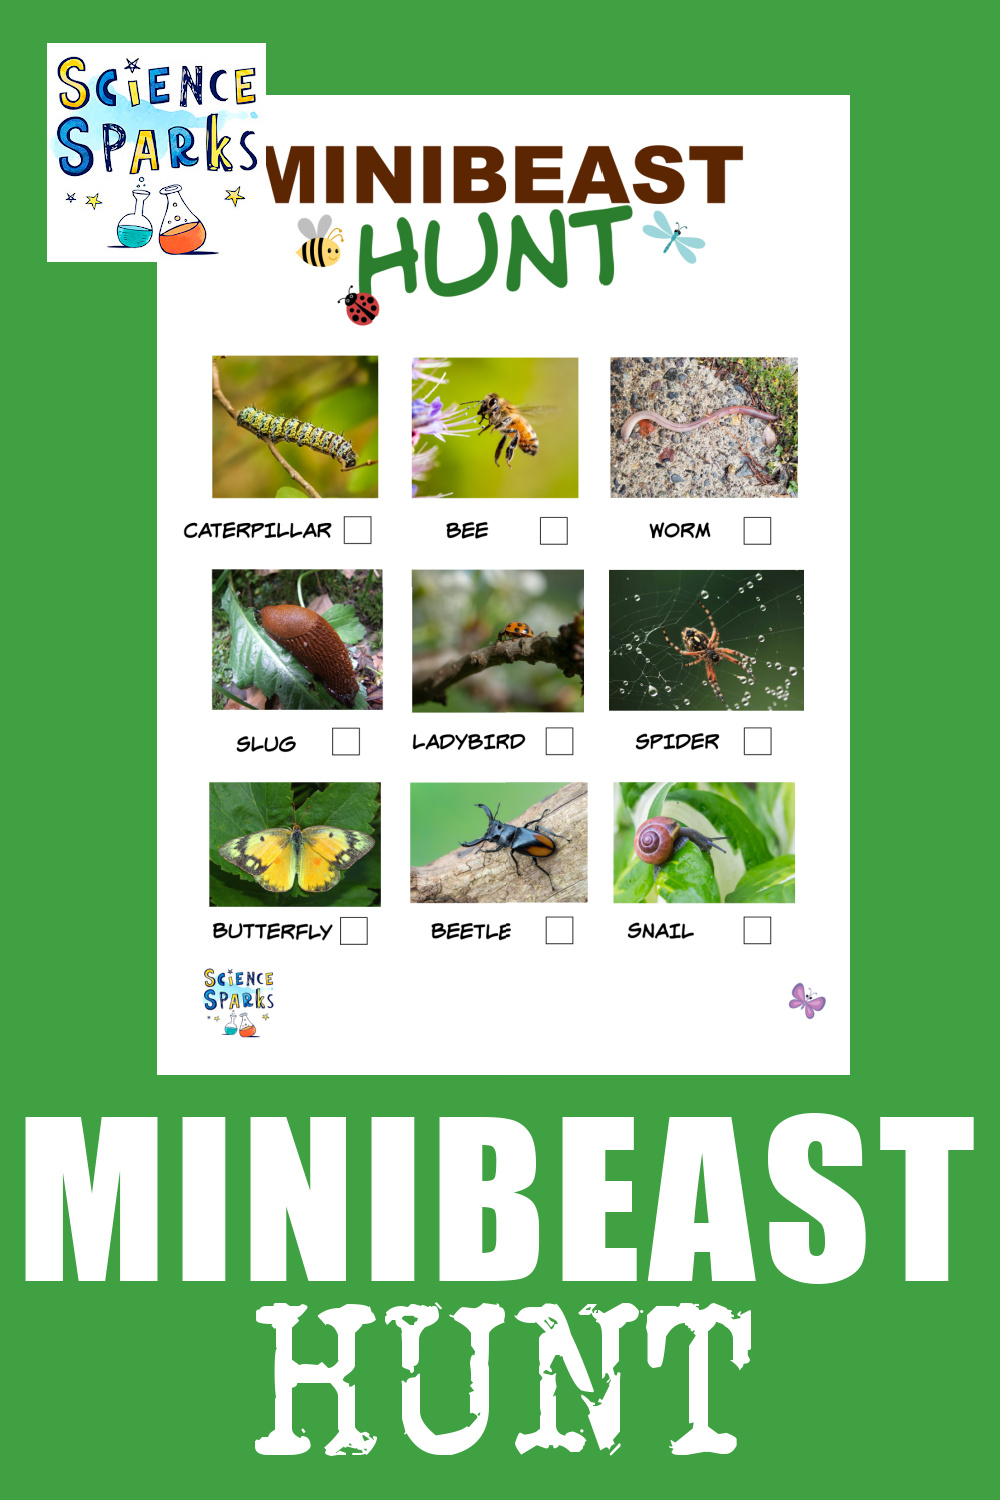 Minibeast hunt tips and tricks